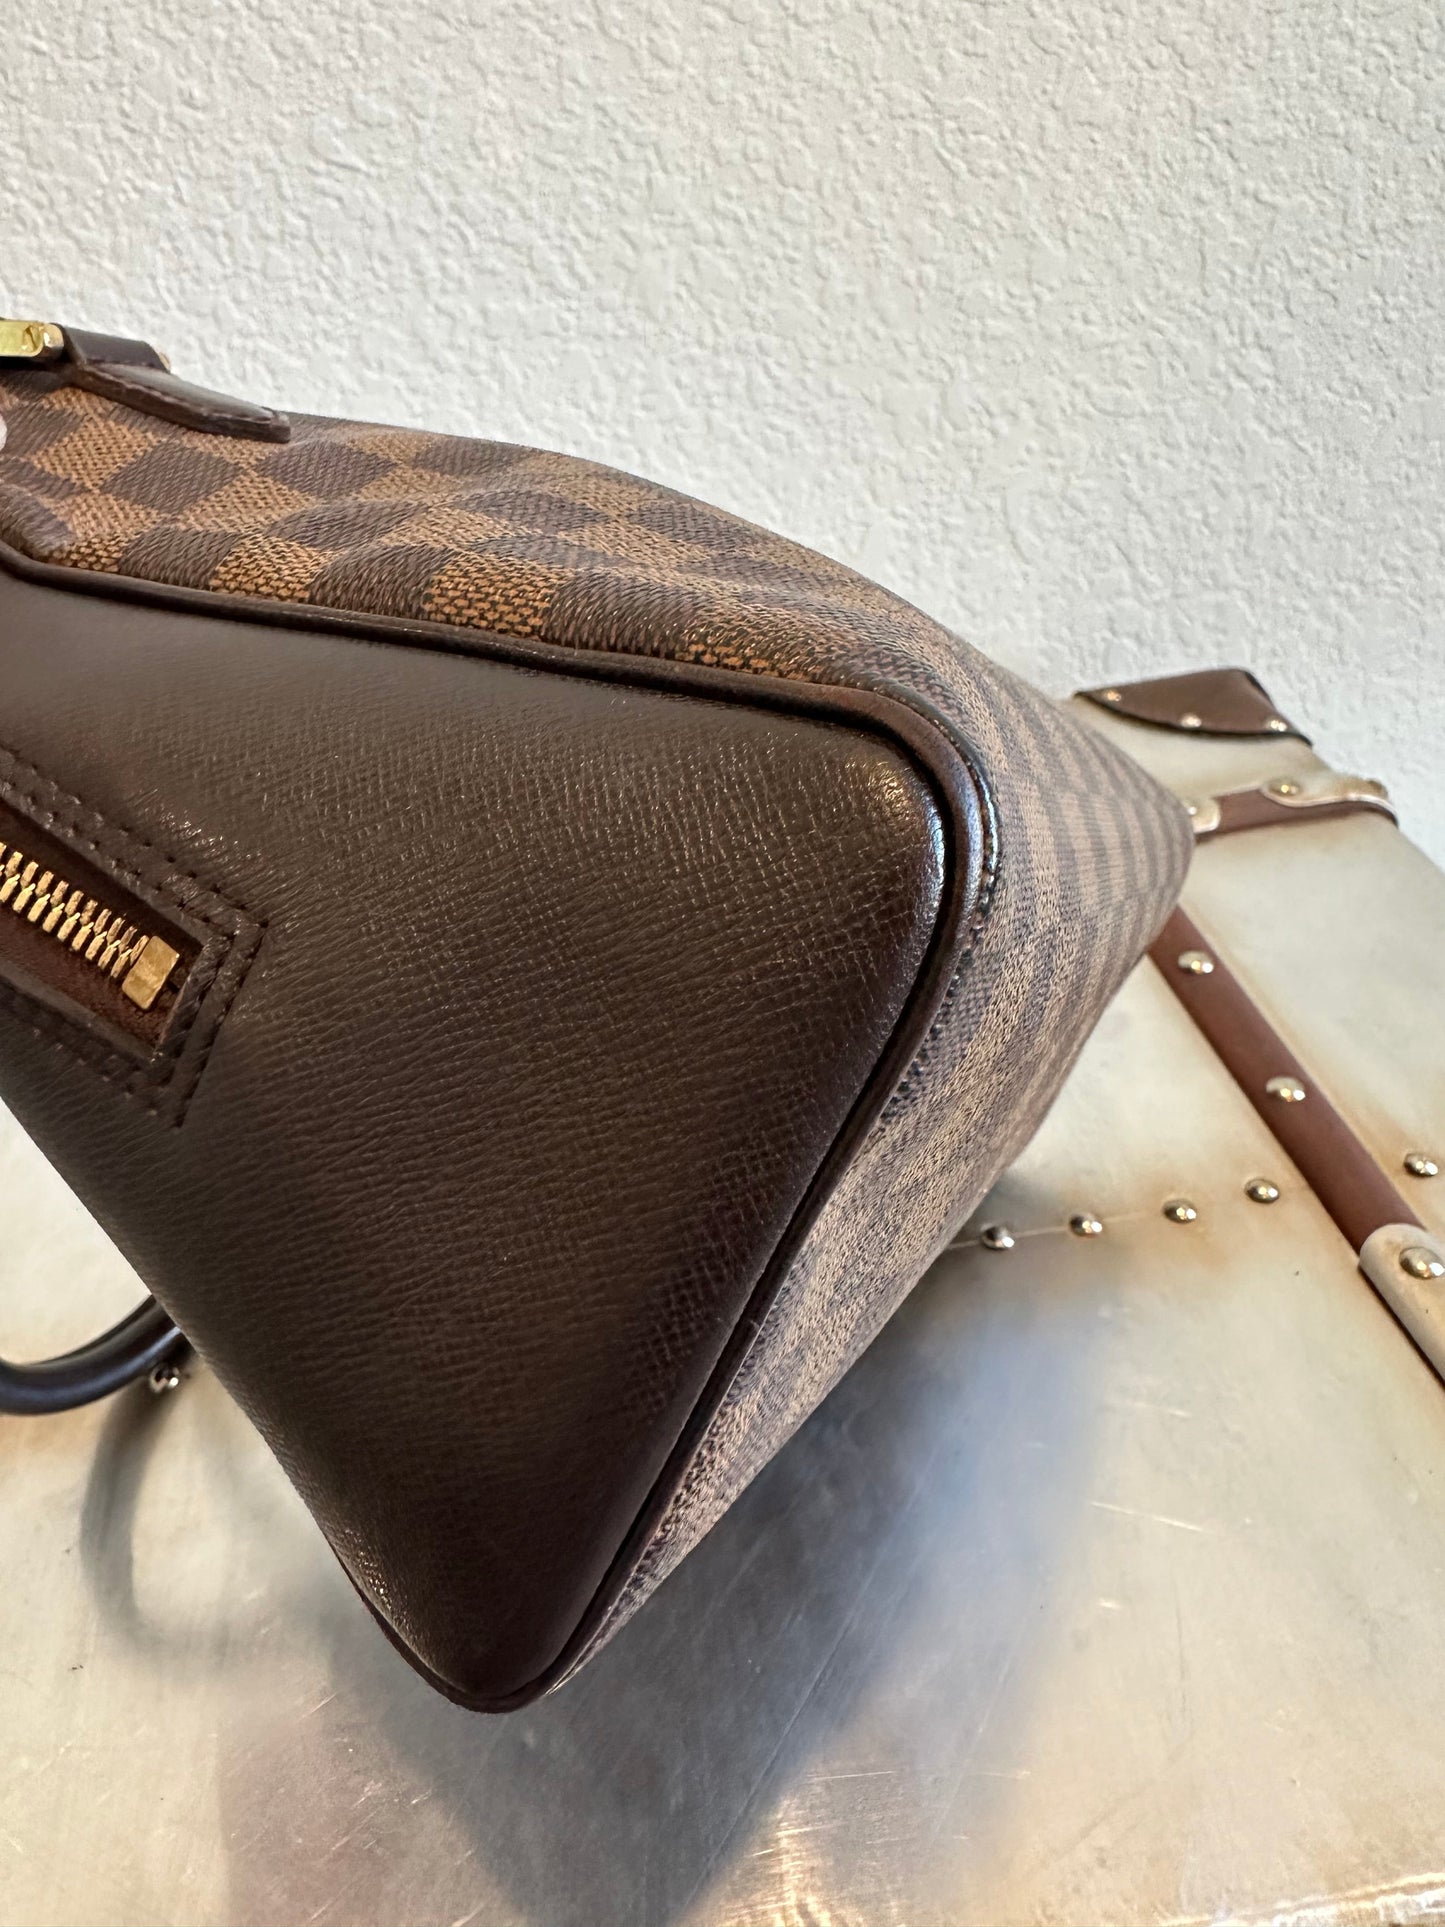 Pre-owned Authentic Louis Vuitton Brera Damier Ebene Handbag